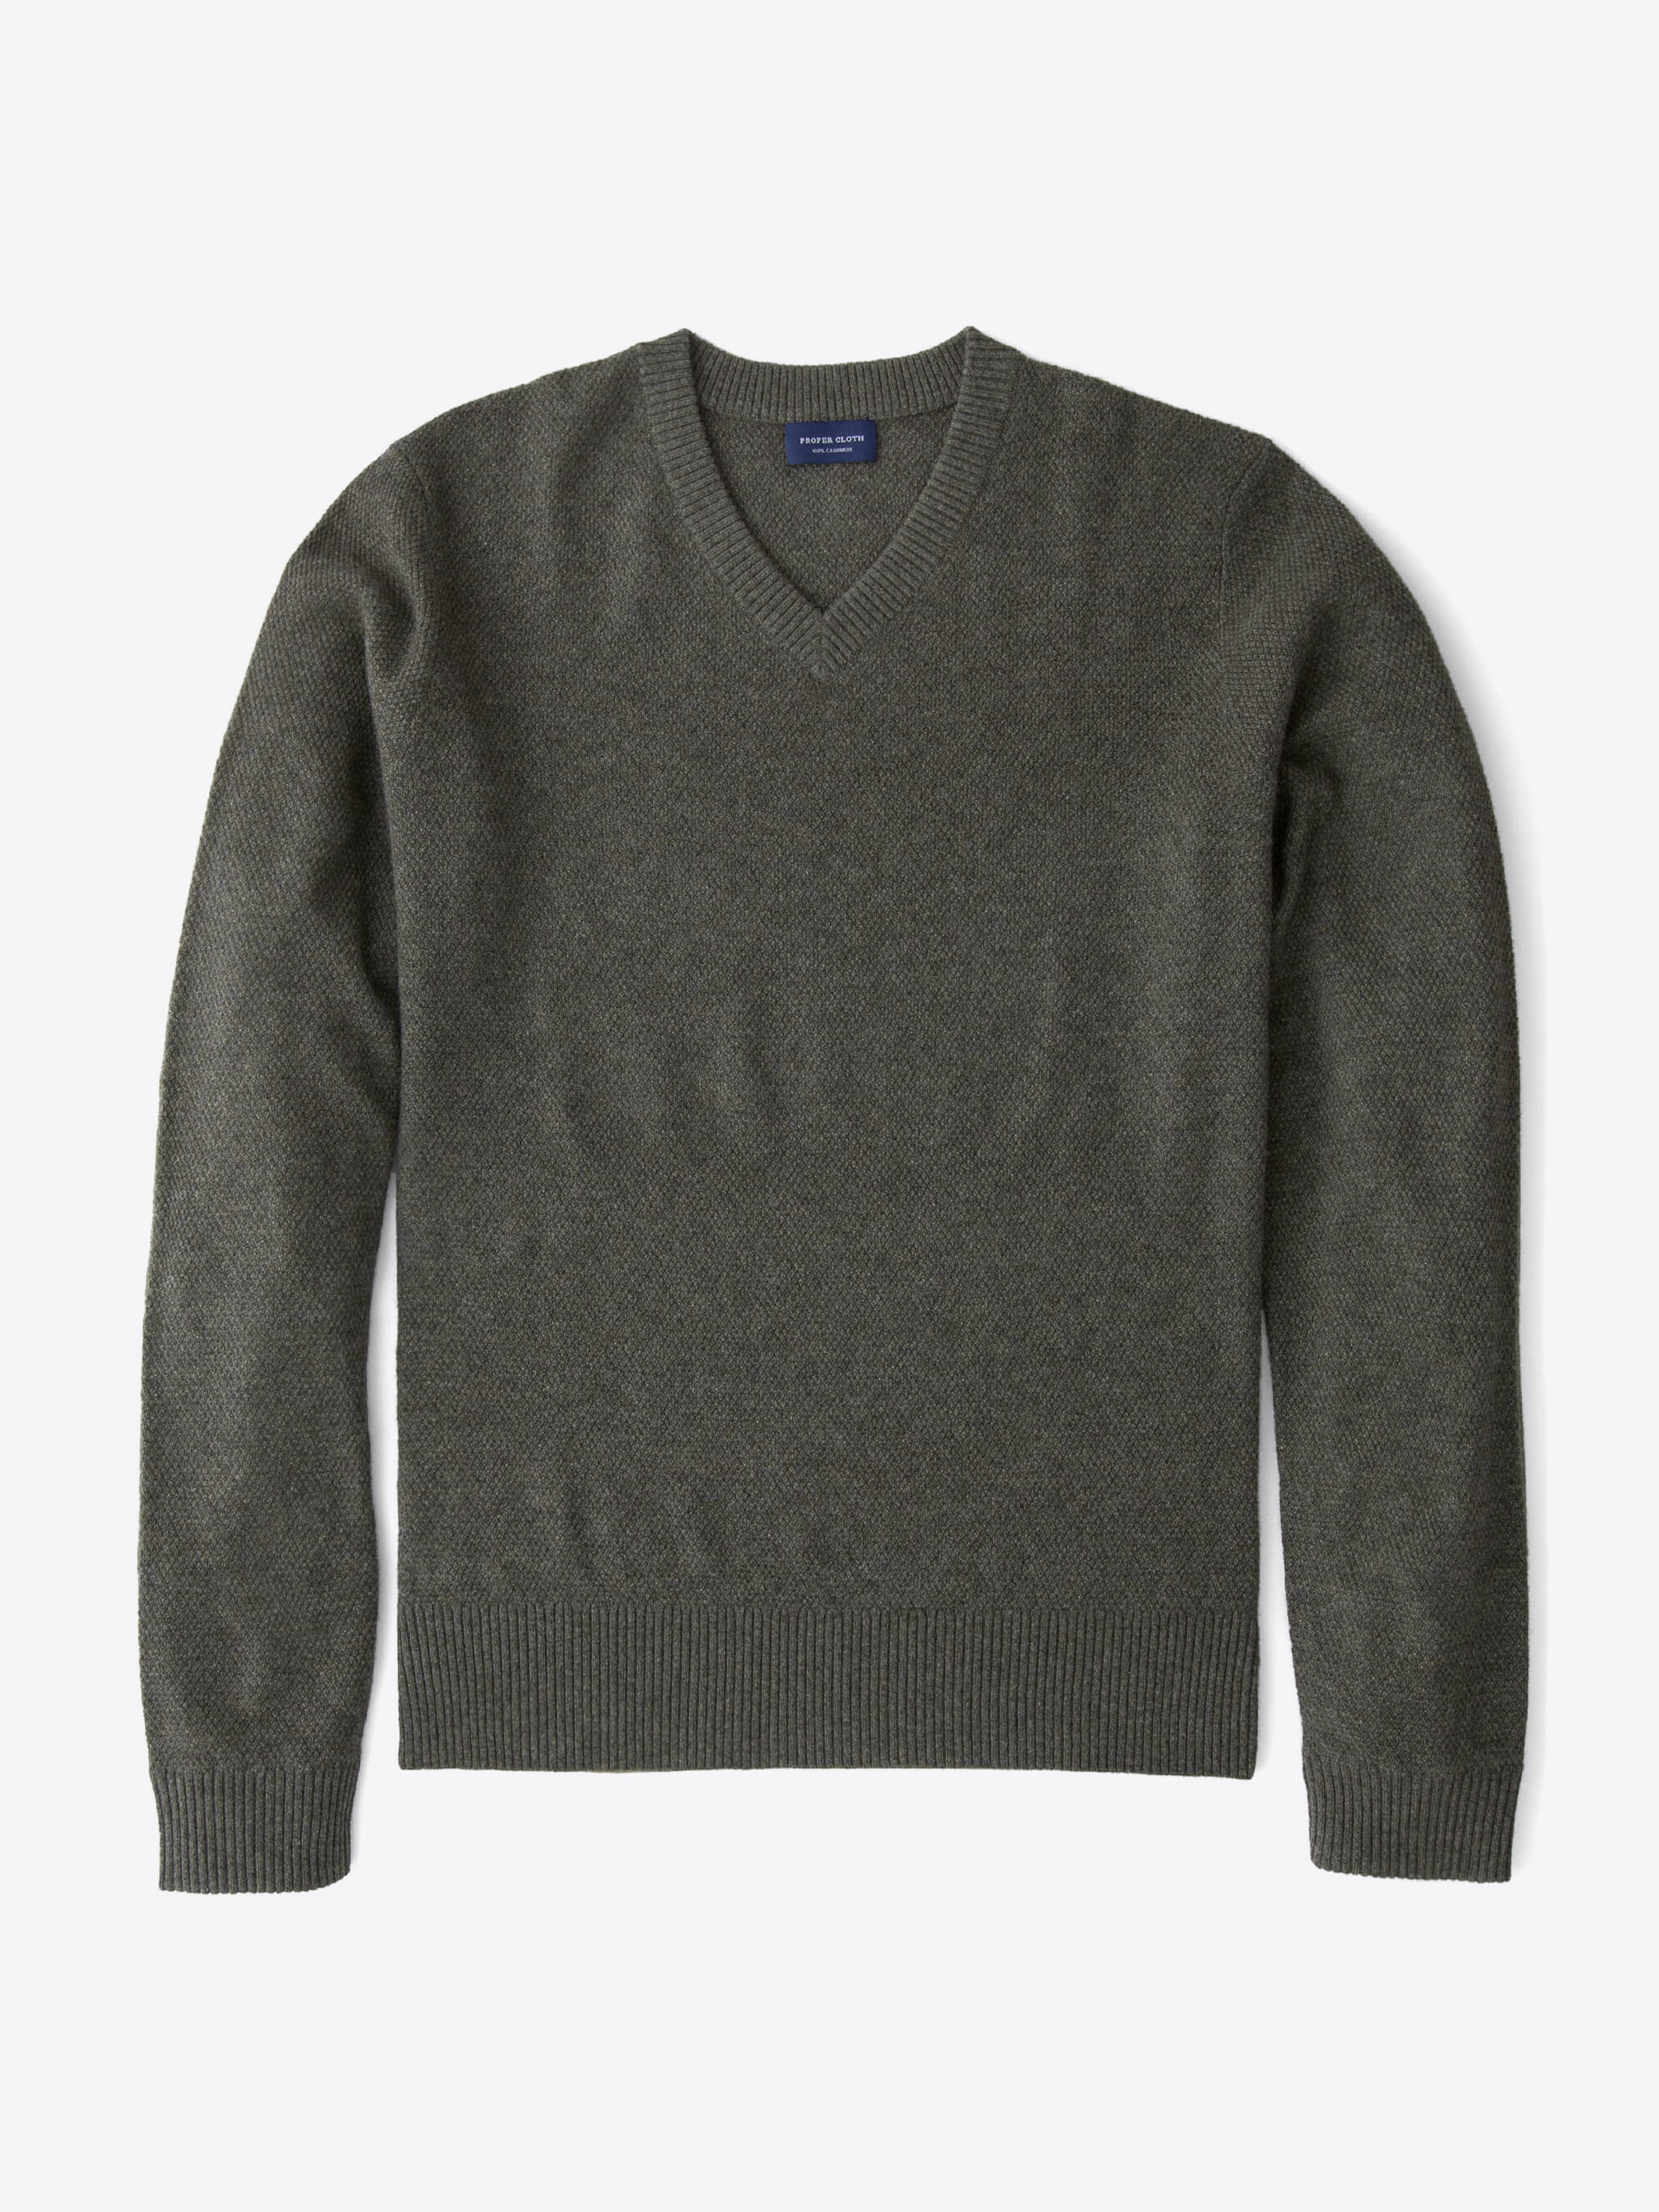 Zoom Image of Pine Cobble Stitch Cashmere V-Neck Sweater